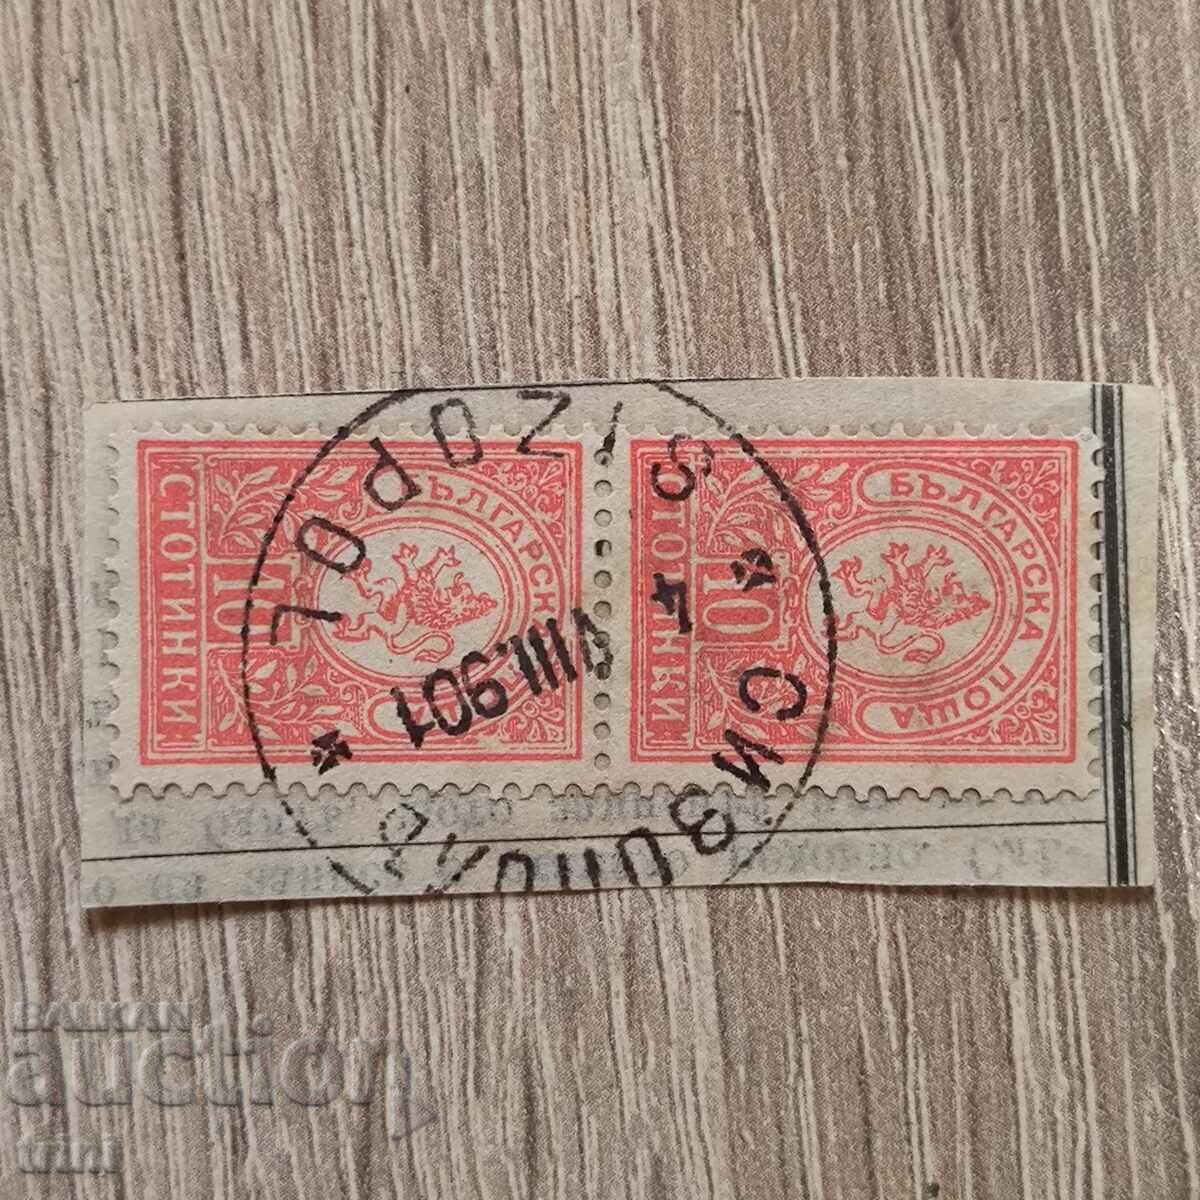 Bulgaria Small Lion 1889 2 X 10th cent stamp Sizopol (Sozopol)